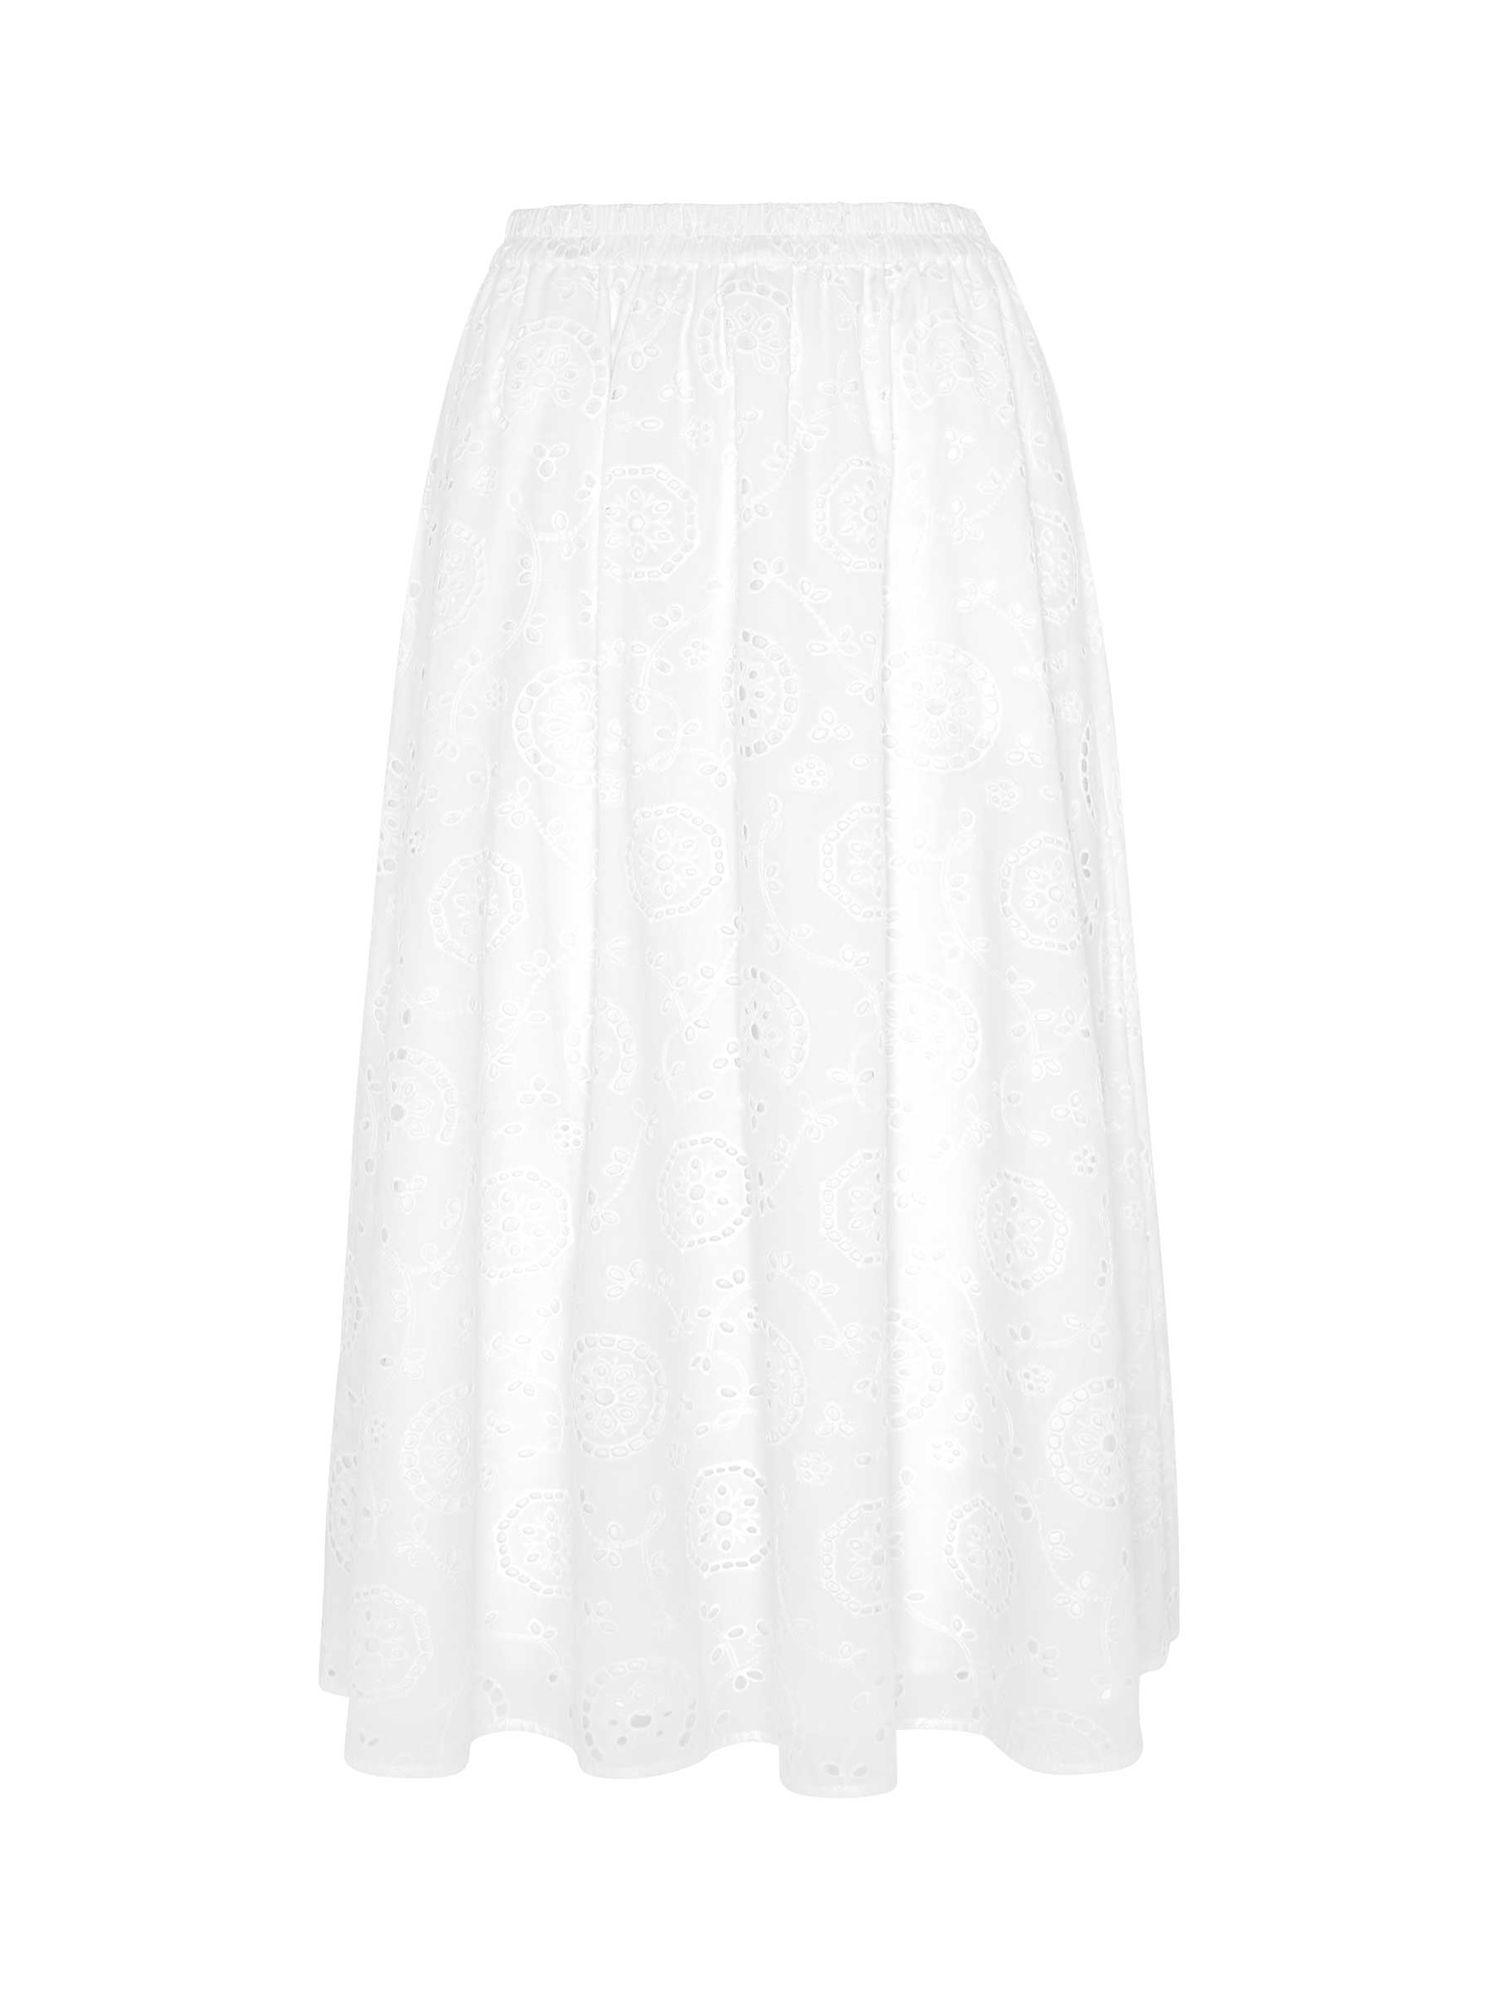 Buy Vivere By Savannah Miller Valentina Broderie Anglaise Midi Skirt, White Online at johnlewis.com